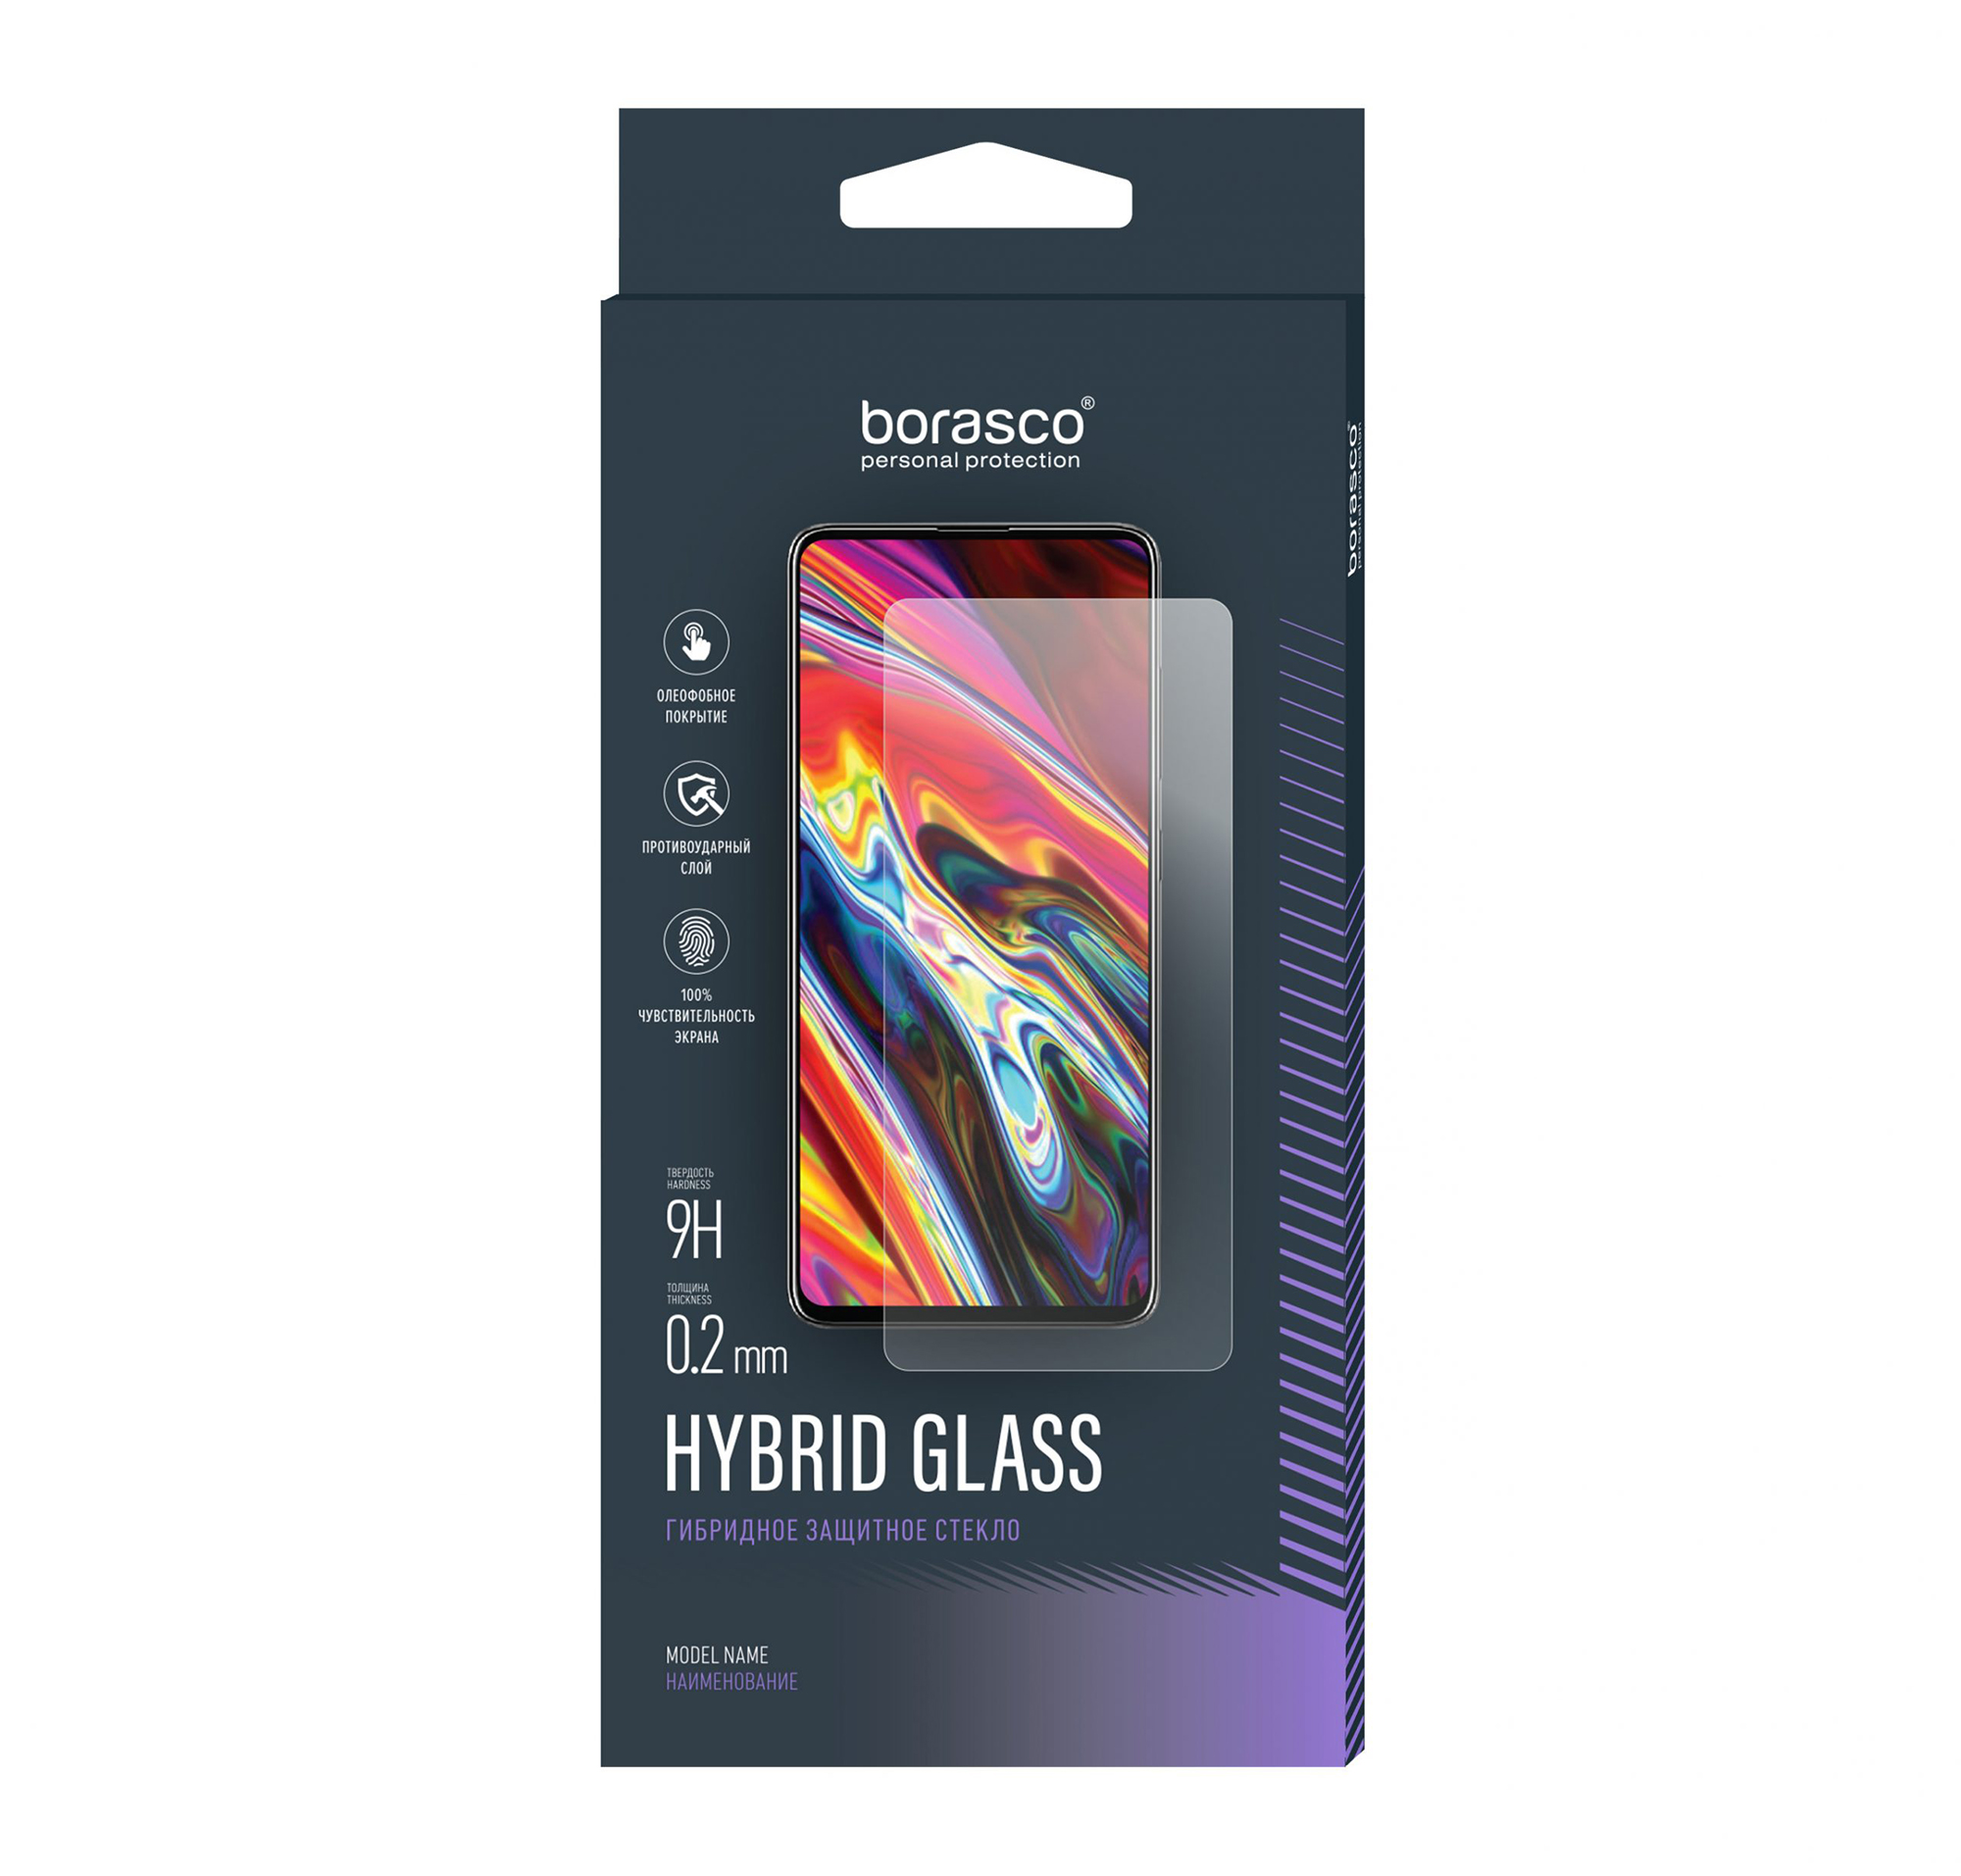 Защитное стекло Hybrid Glass для Motorola MOTO E5 Plus